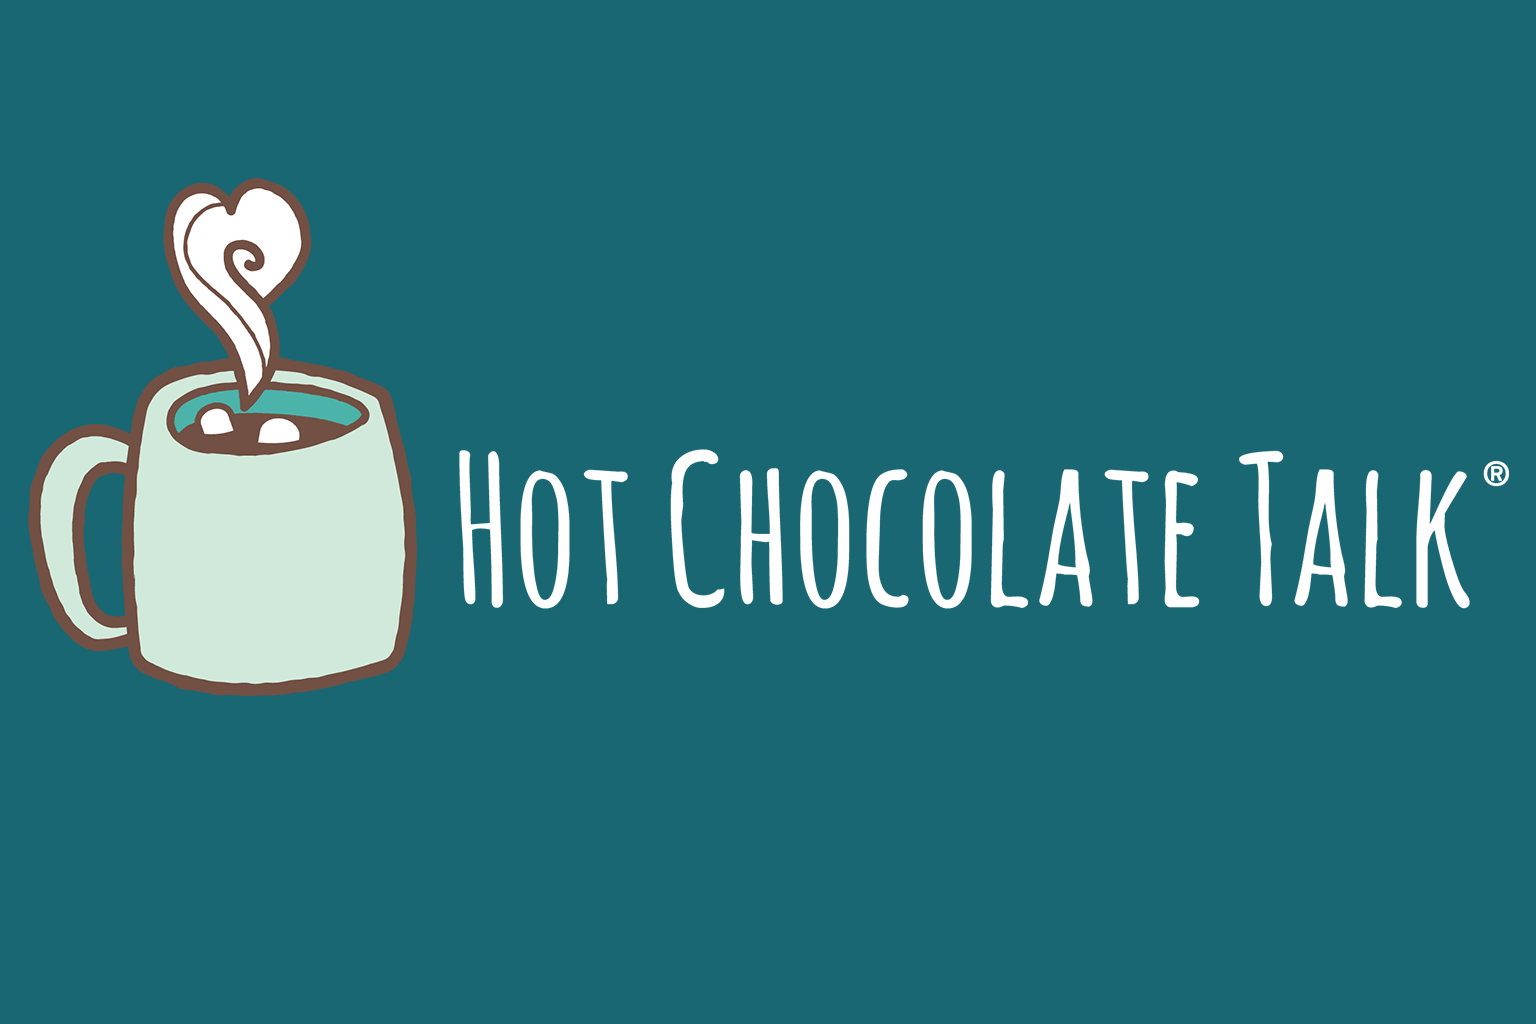 Hot Chocolate Talk logo.